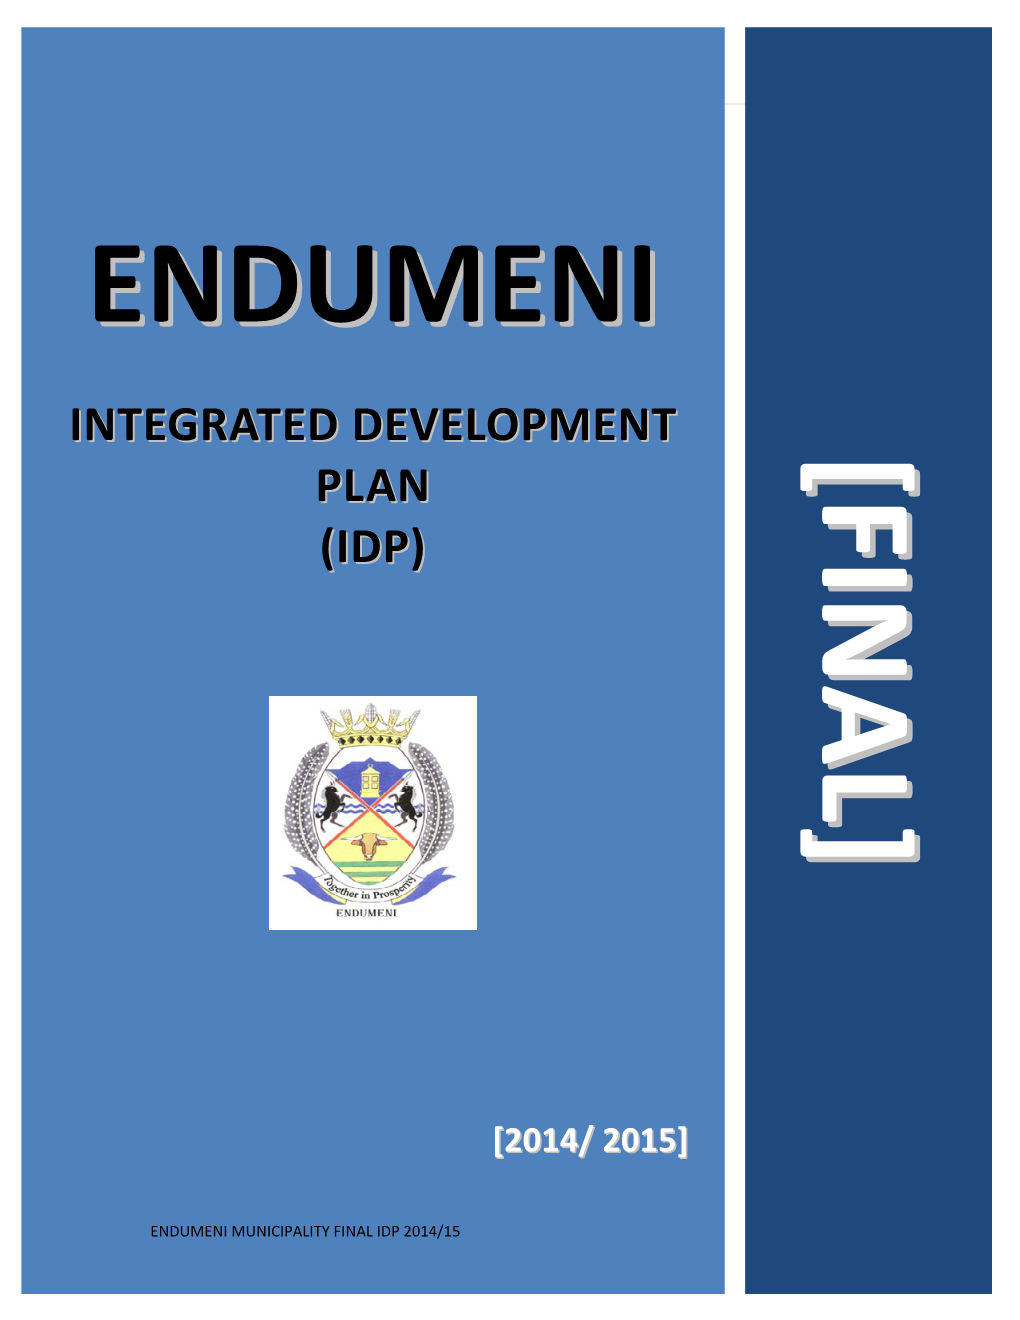 [Endumeni Integrated Development Plan (Idp)]